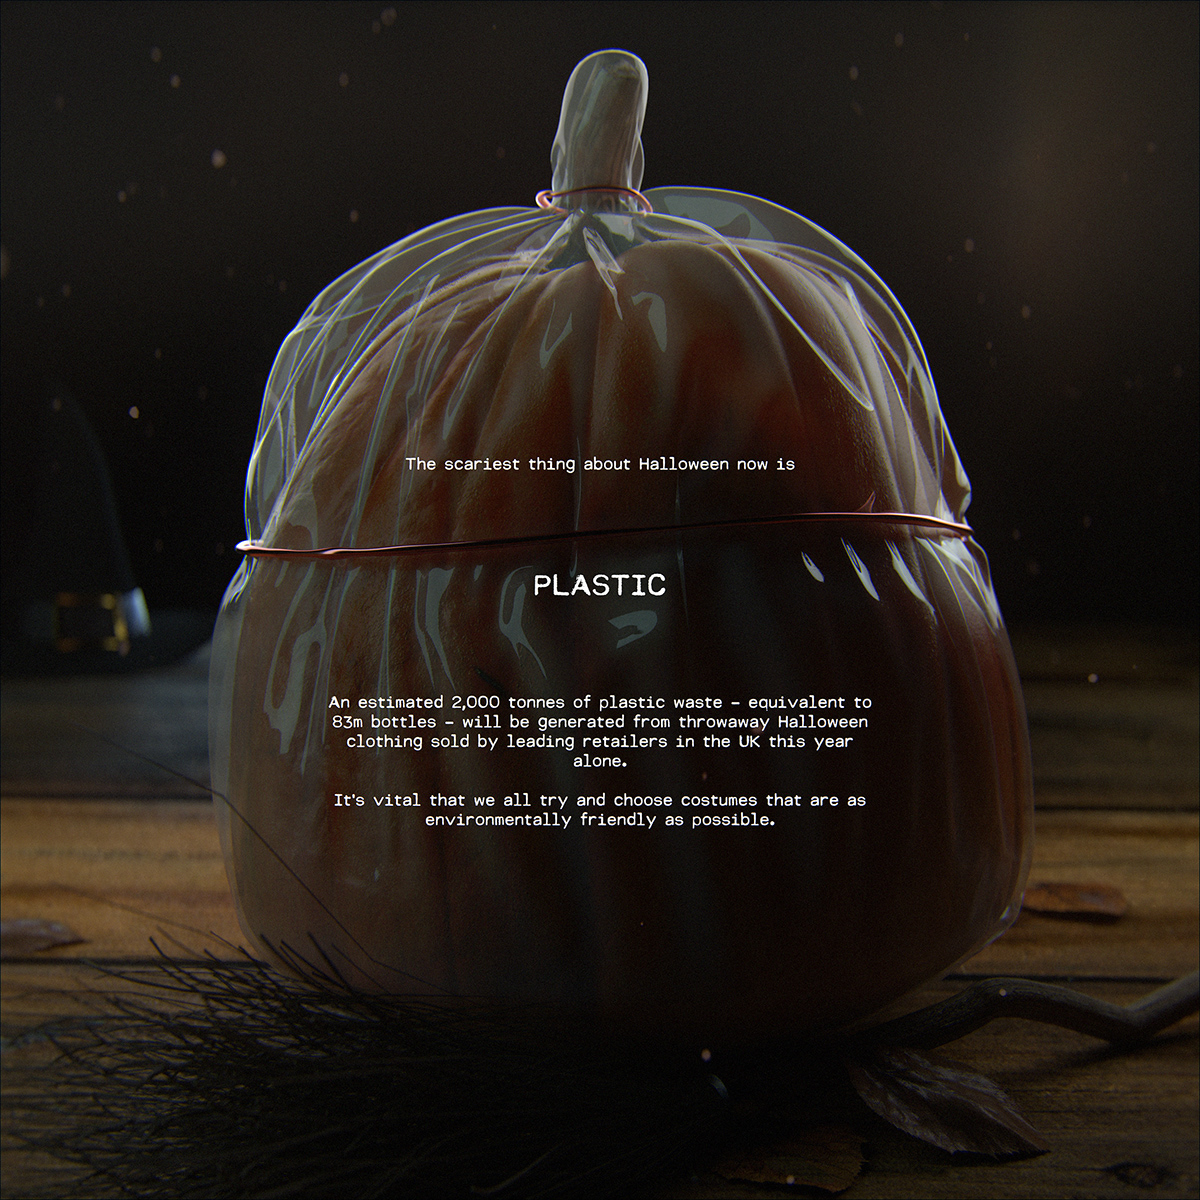 plastic Halloweem waste garbage pumpkin orange message climatechange spooky horror